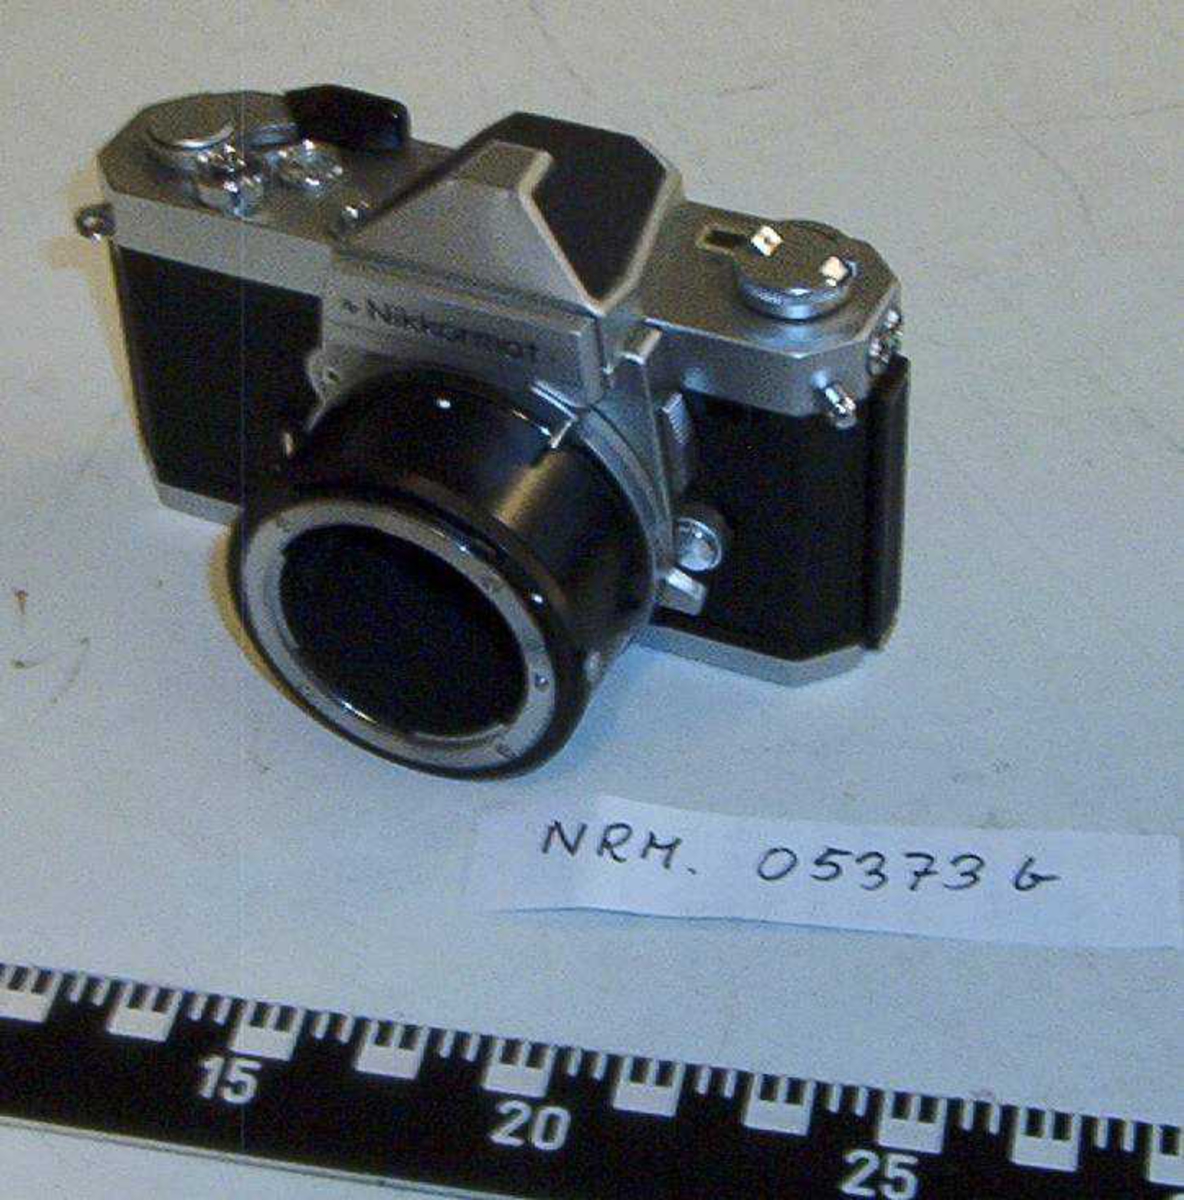 4 nikkormat fotokameraer:
NRM. 05373a - FT42744386
NRM. 05373b - FT4485898
NRM. 05373c - FT4481593
NRM. 05373d - FT4094875